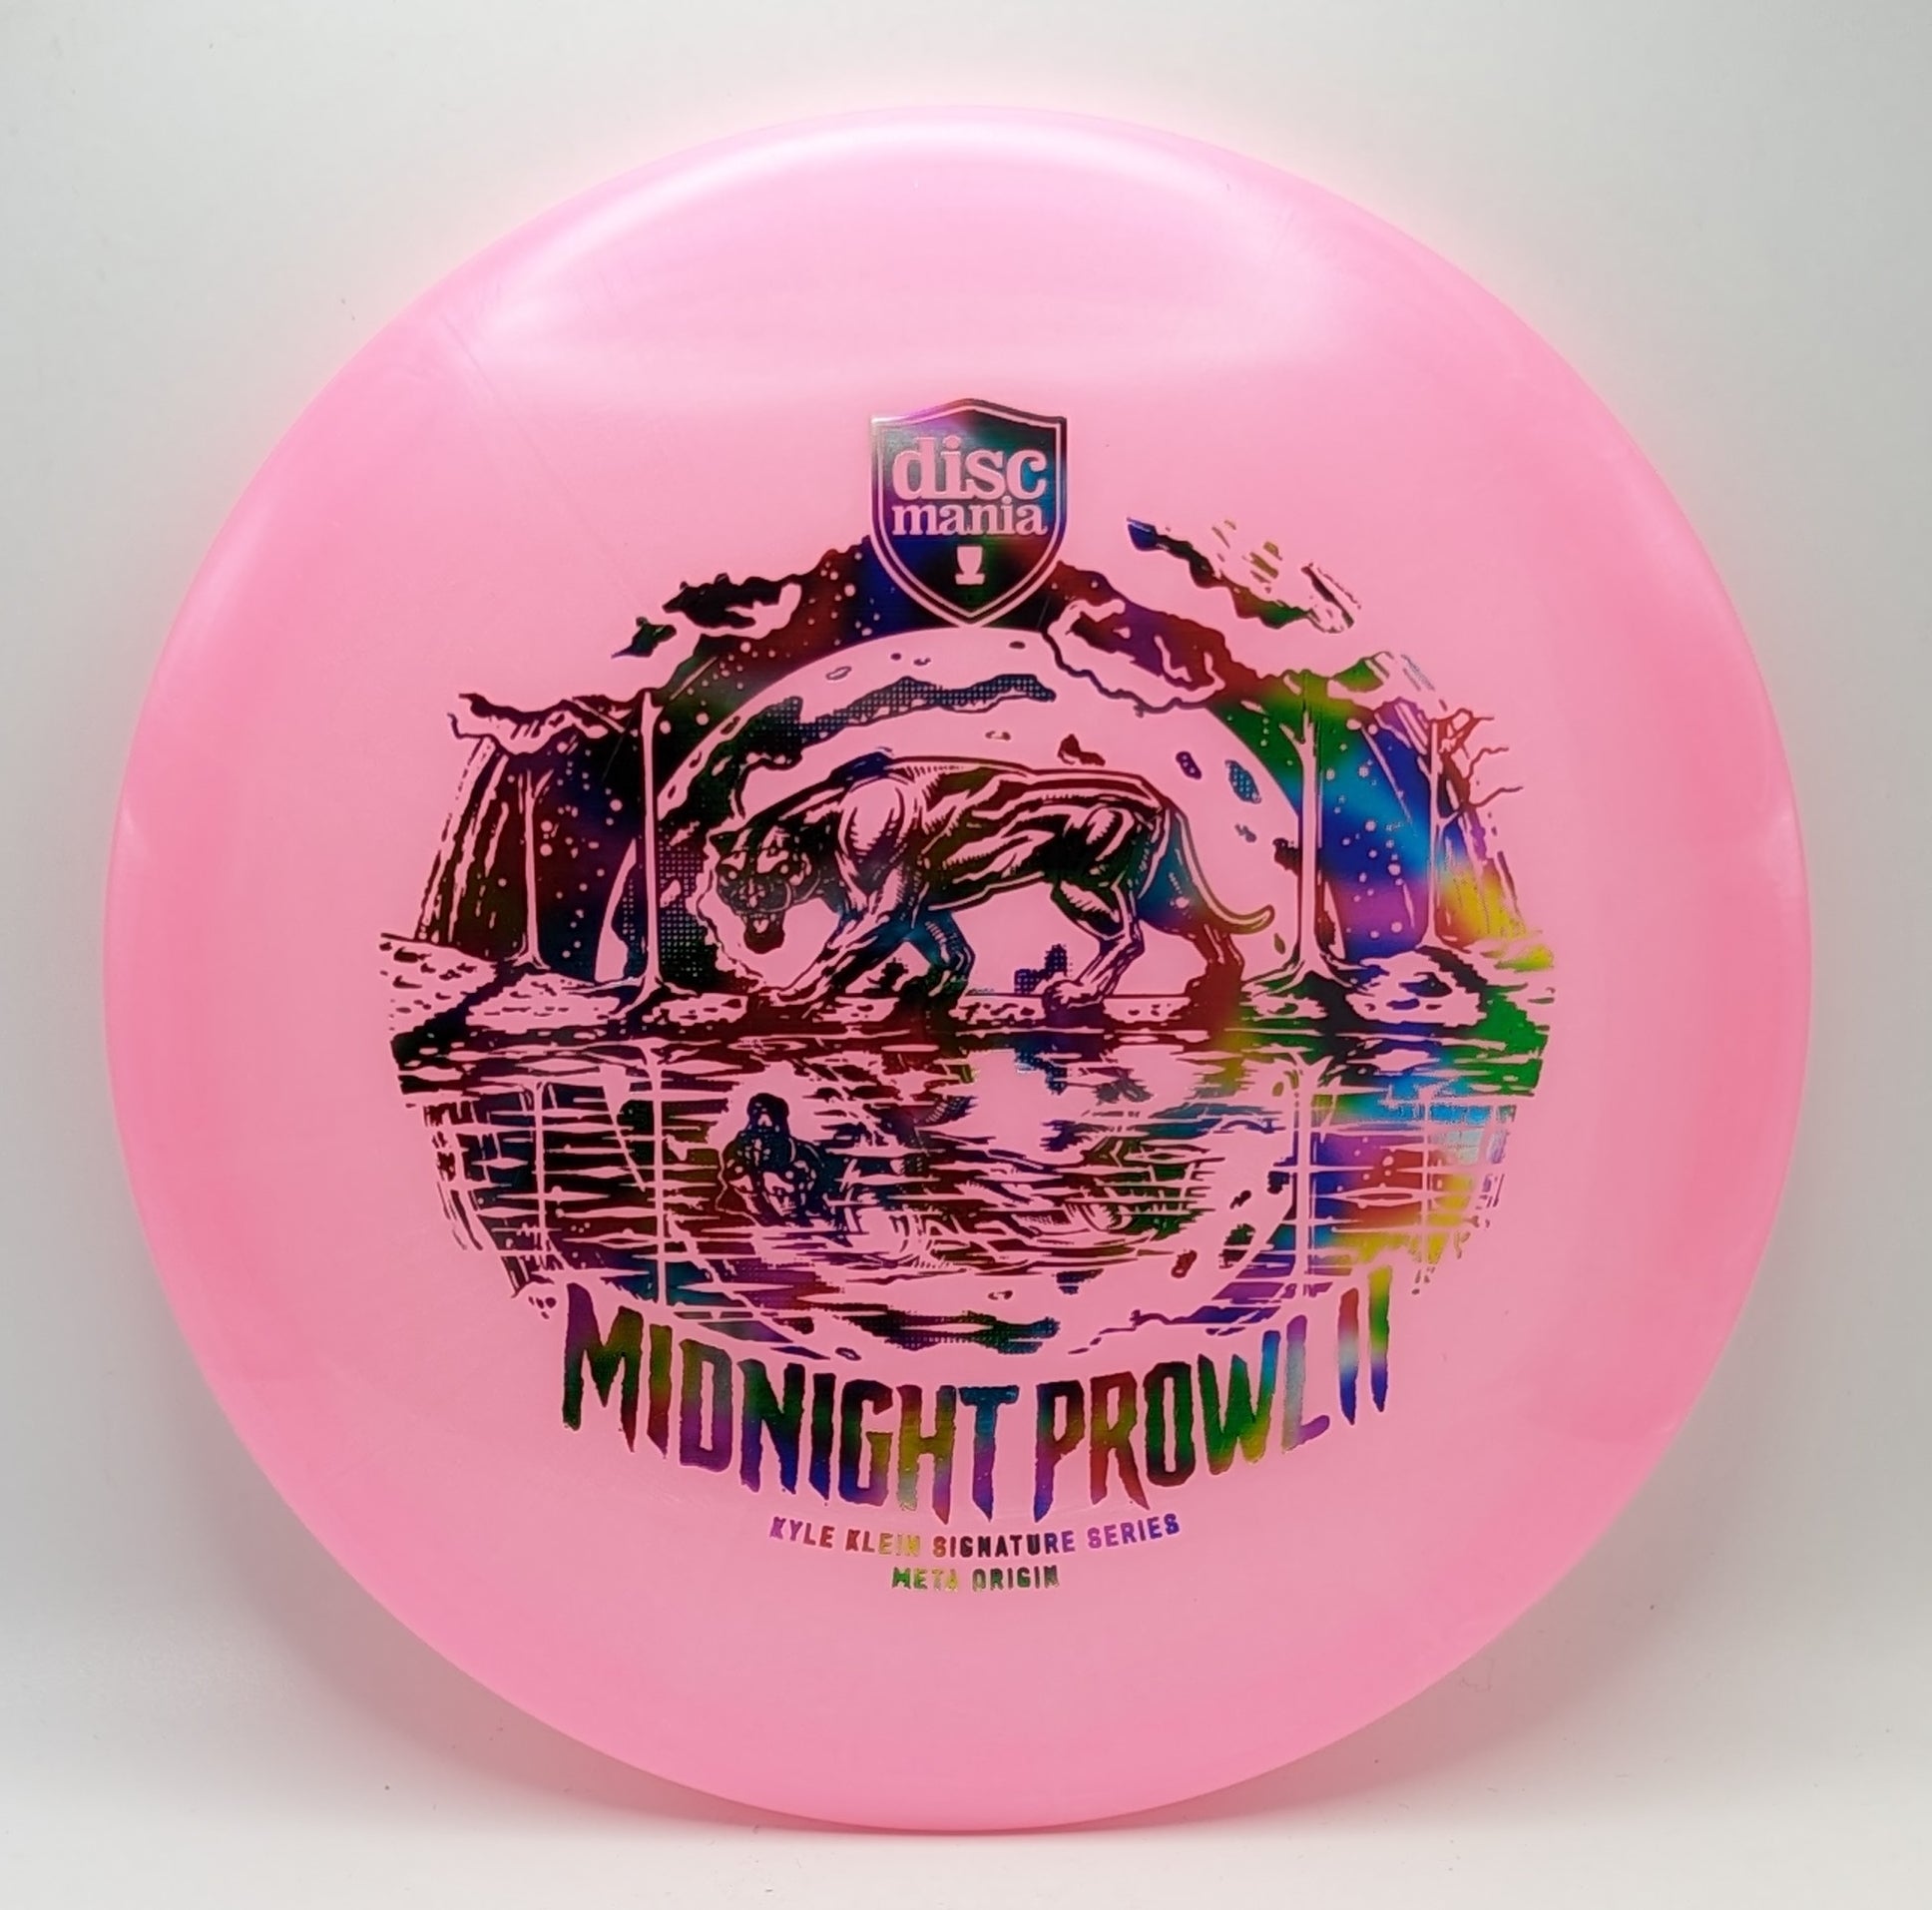 Midnight Prowl 2 - Kyle Klein Signature Series Meta Origin-1